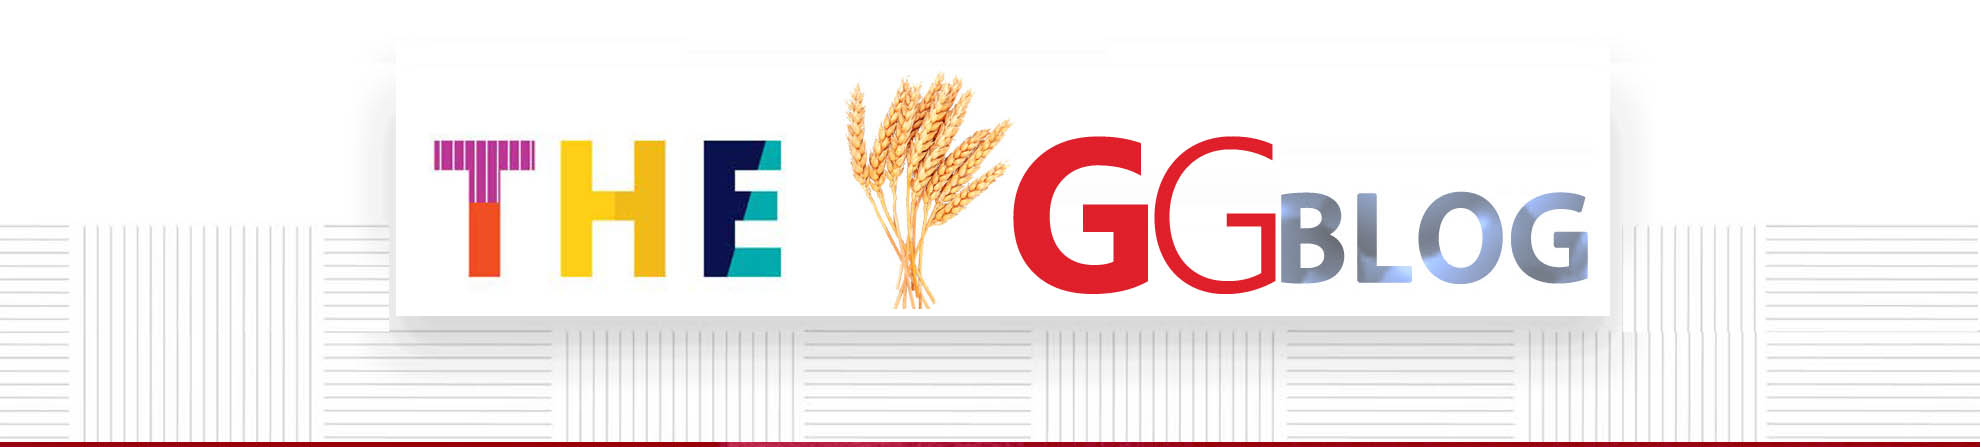 000gg blog logo2021